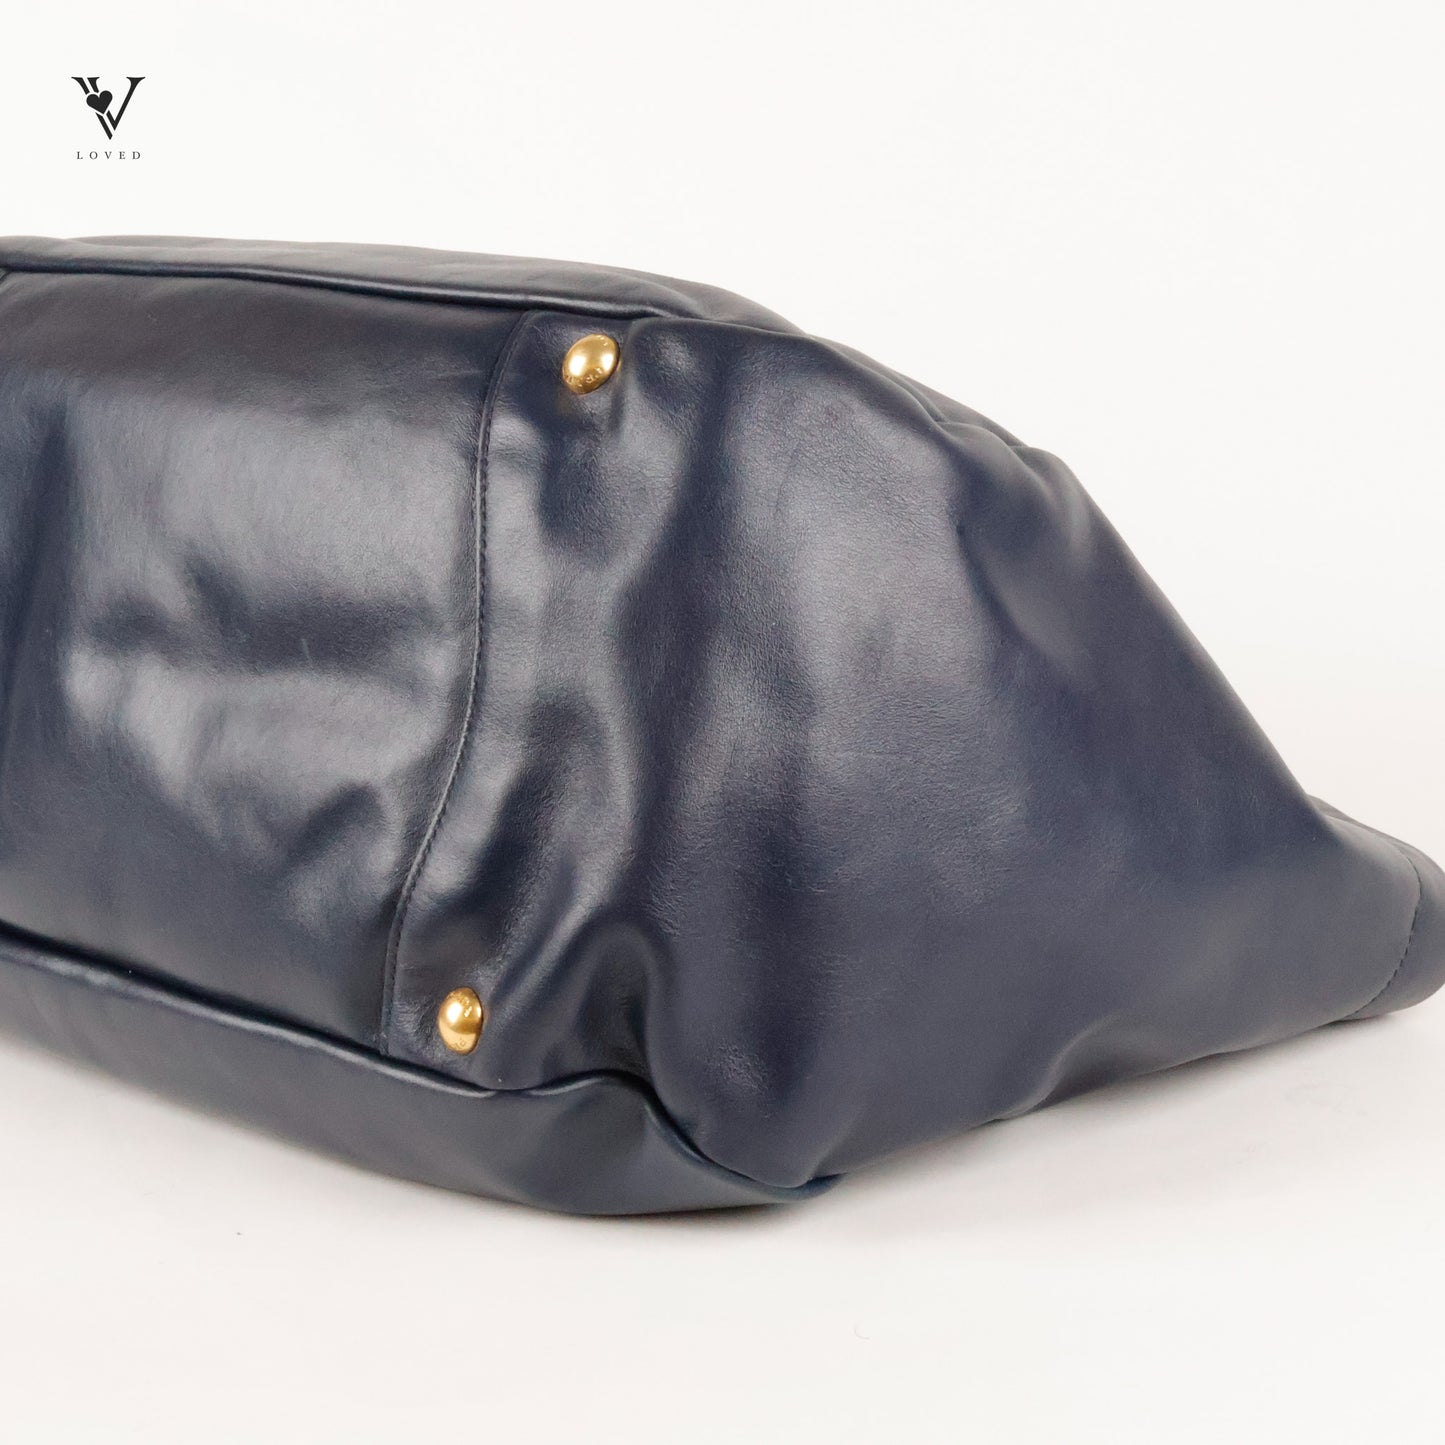 Baltico Calfskin Leather Chain Tote Bag